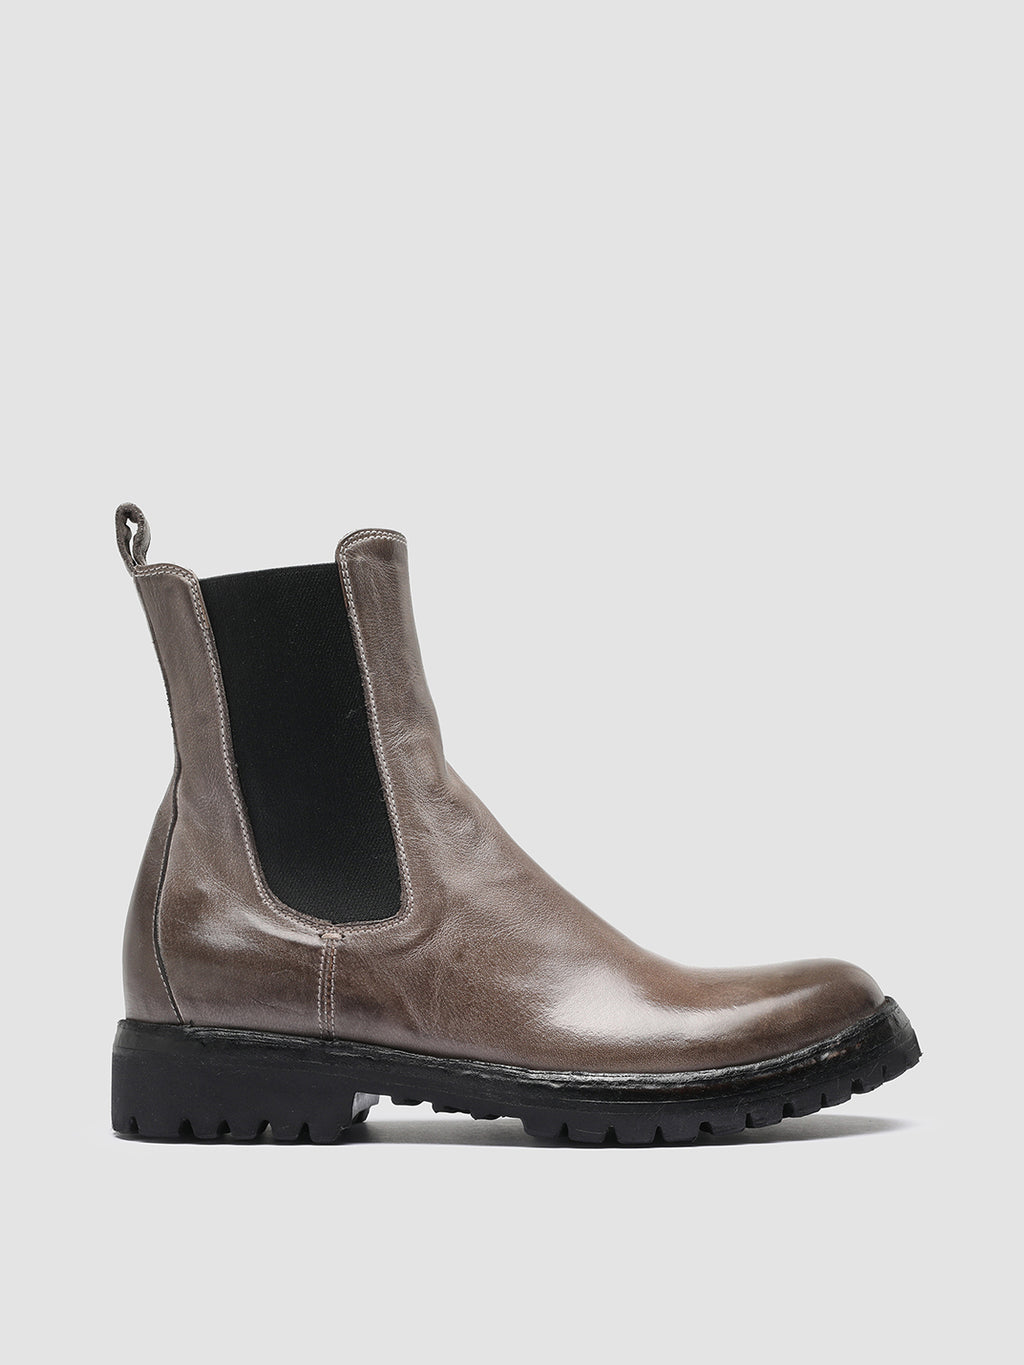 LORAINE 004 Walnut - Taupe Leather Chelsea Boots Women Officine Creative - 1